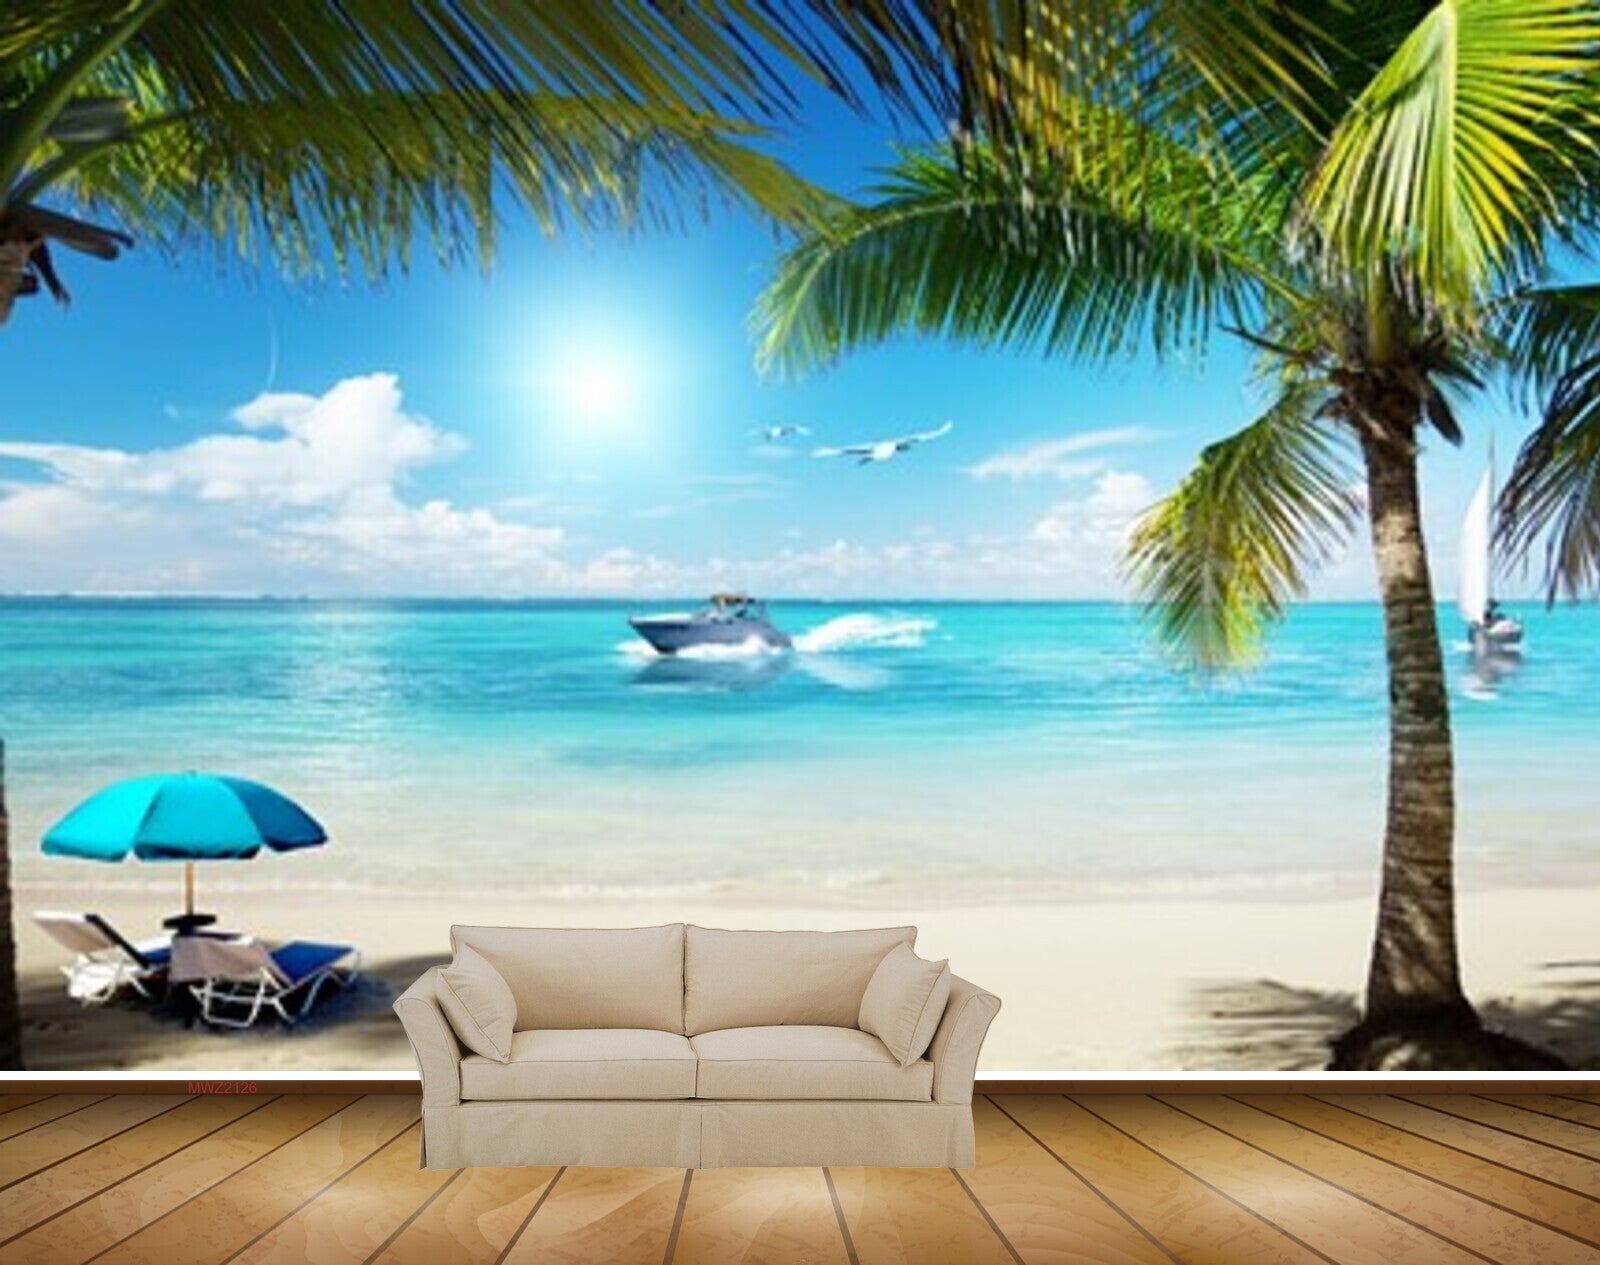 Avikalp MWZ2126 Beach Coconut  Tree Ship Birds Shells Umbrella Chairs Sun Water Ocean HD Wallpaper